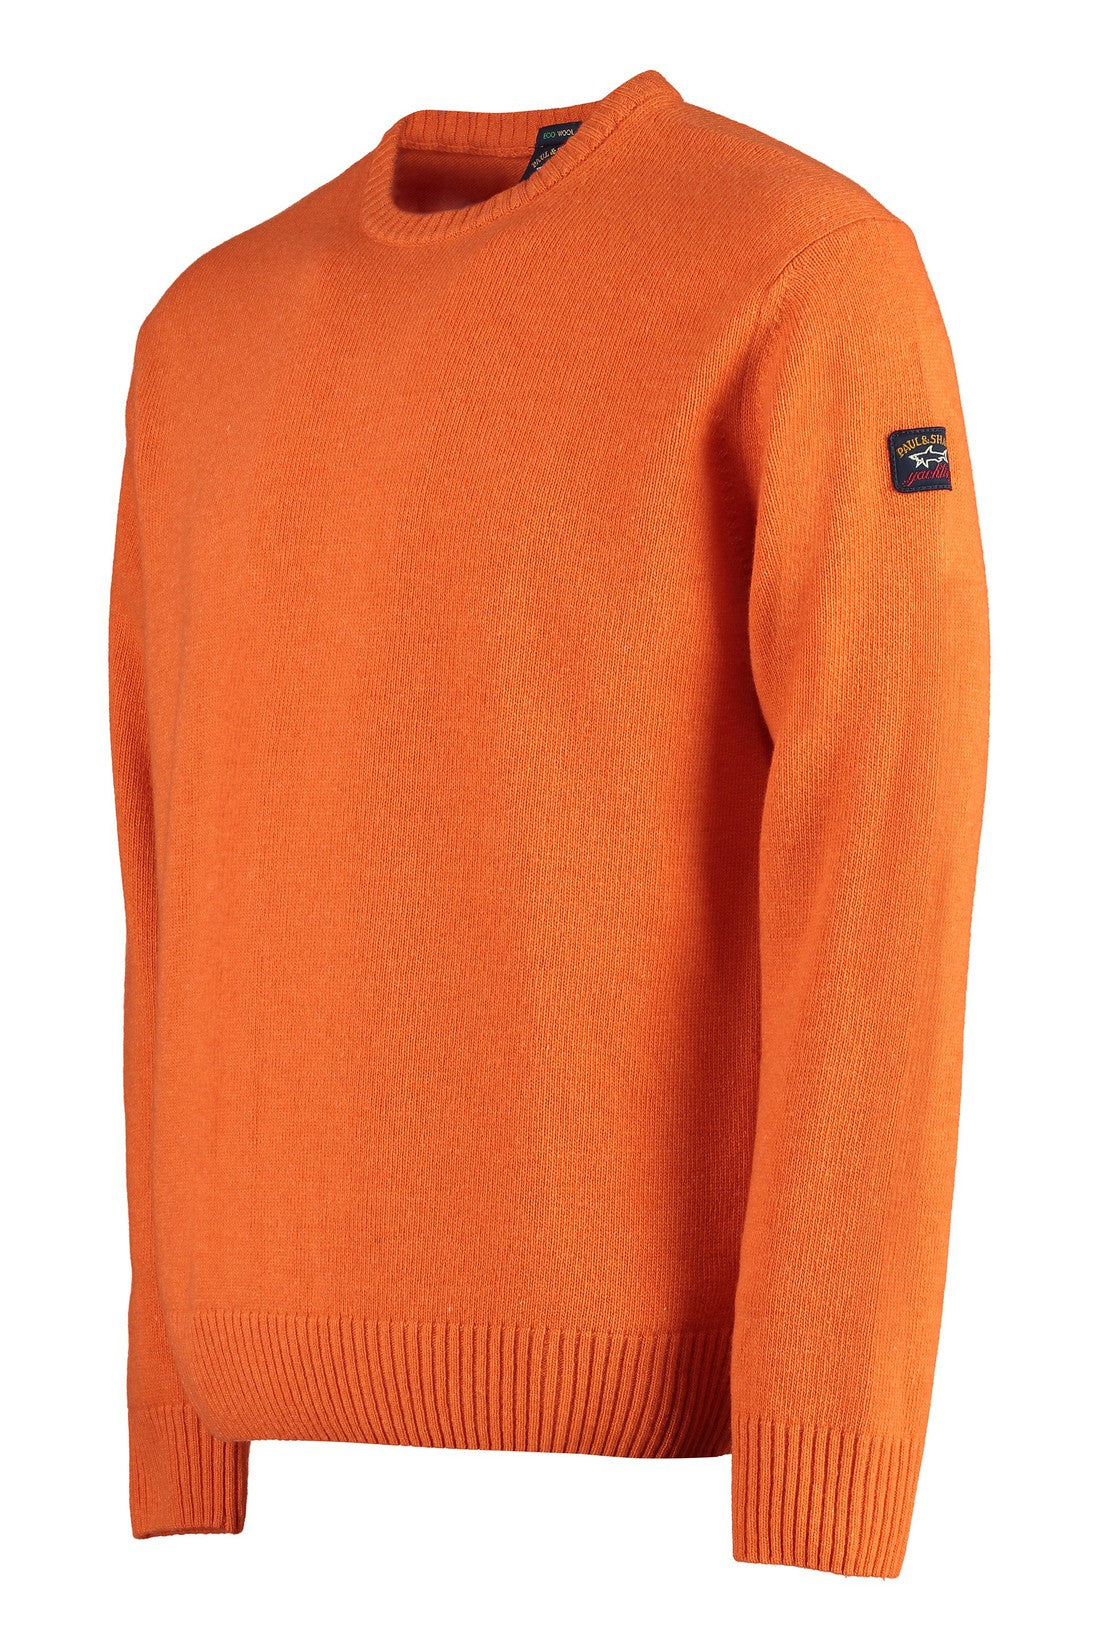 Piralo-OUTLET-SALE-Wool-blend crew-neck sweater-ARCHIVIST